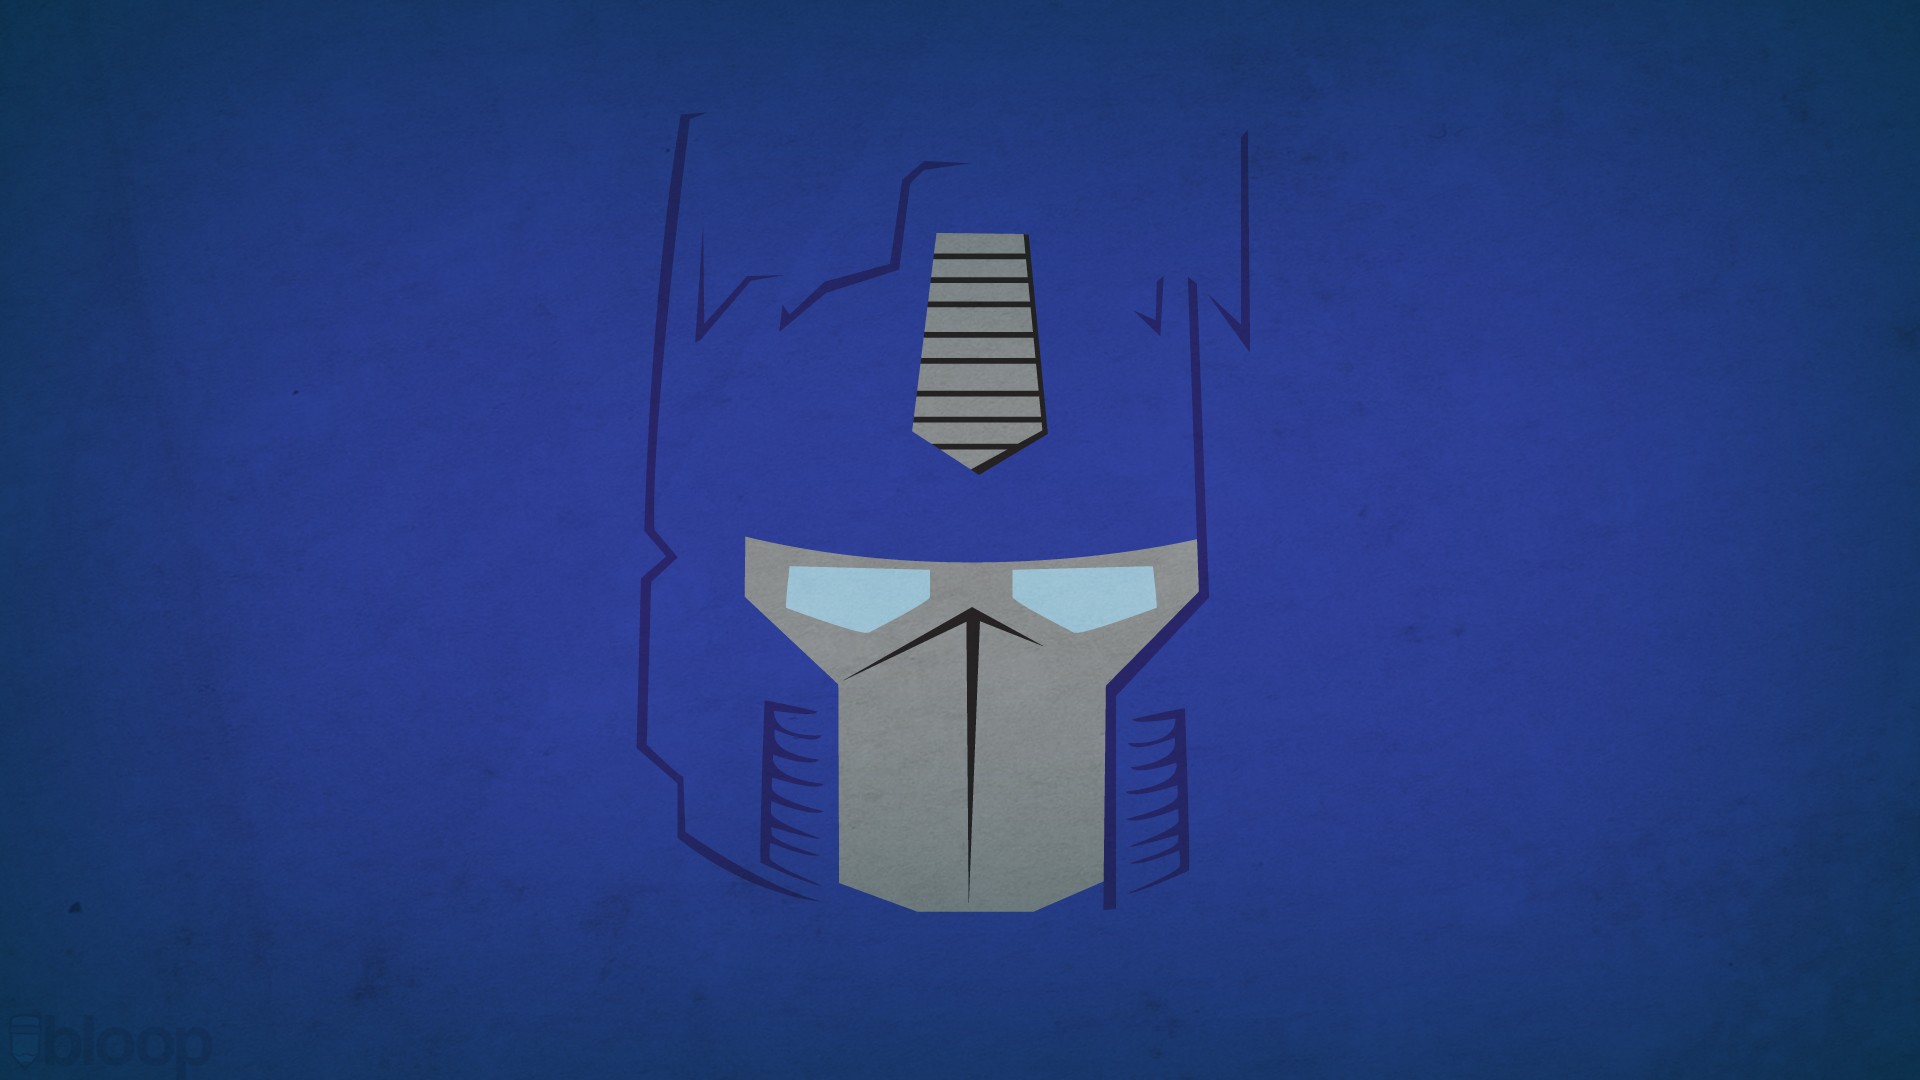 General 1920x1080 hero Optimus Prime Transformers Blo0p minimalism simple background blue background robot Hasbro